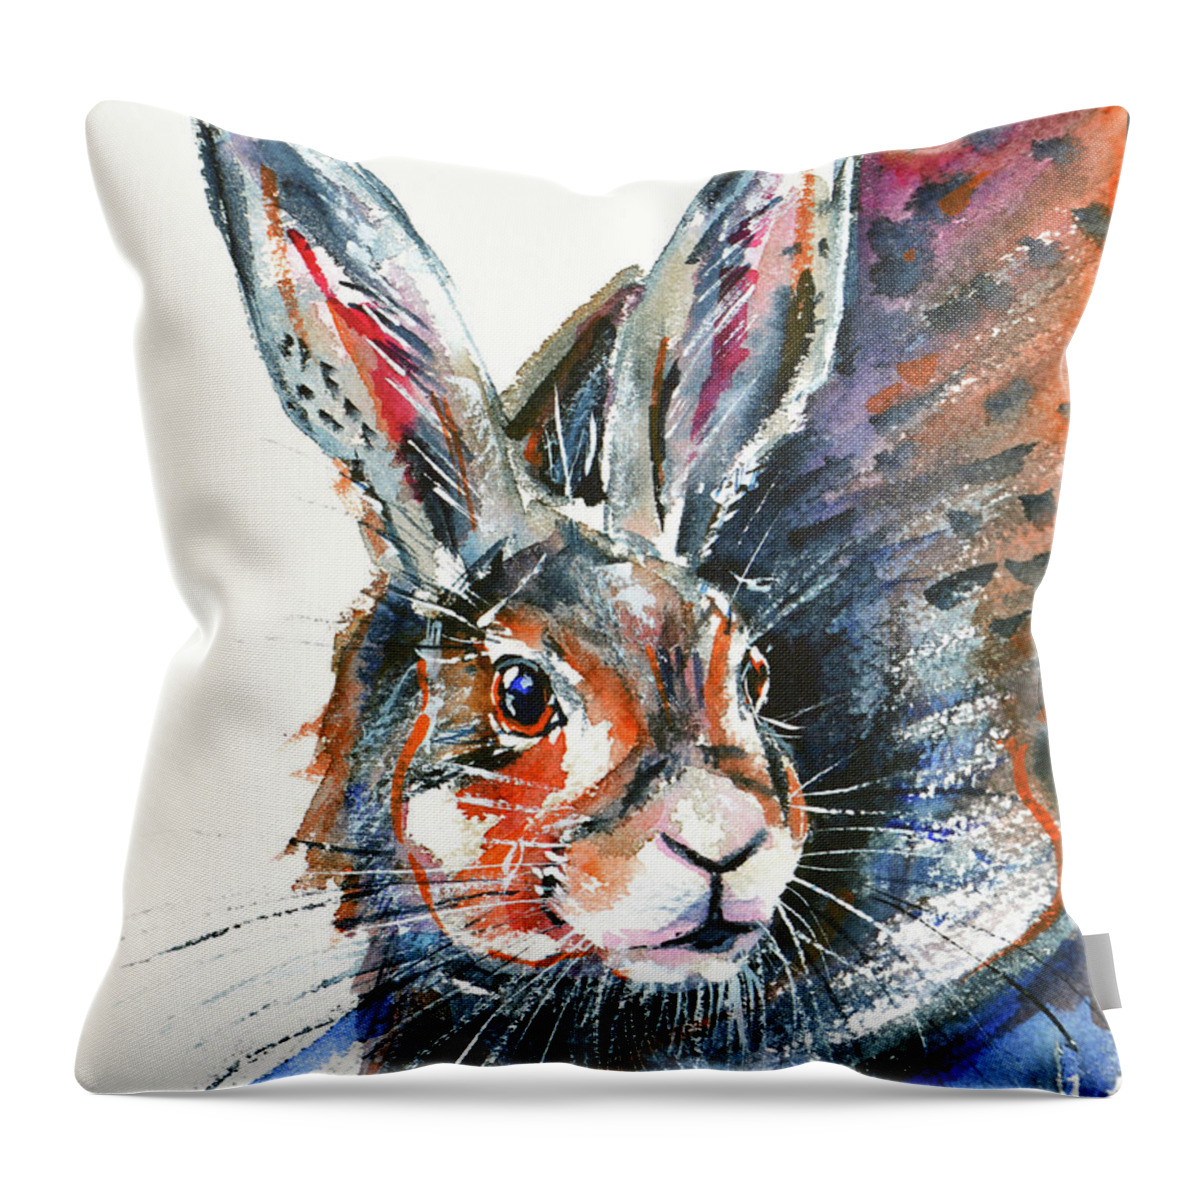 Hare Throw Pillow featuring the painting Shy Hare by Zaira Dzhaubaeva